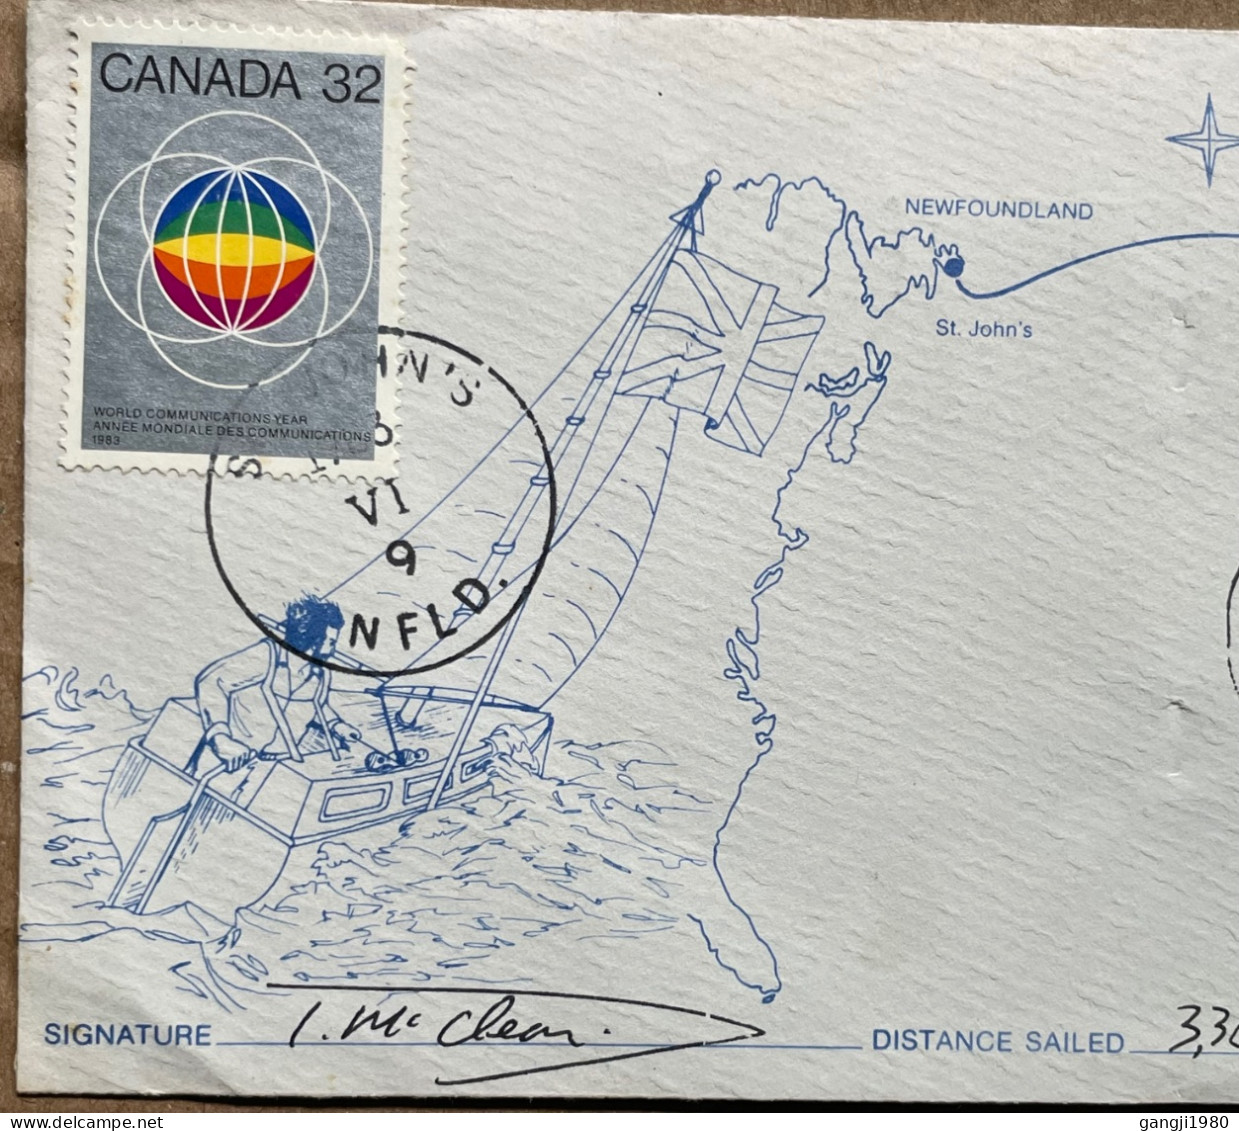 GB CANADA PORTUGAL 1983, COMBO COVER SIGNATURE TUM MC CLEAN, 33,60 MILE DISTANCE 62 DAYS SEA TOUR, ST.JOHN'S & PORTO CIT - Lettres & Documents